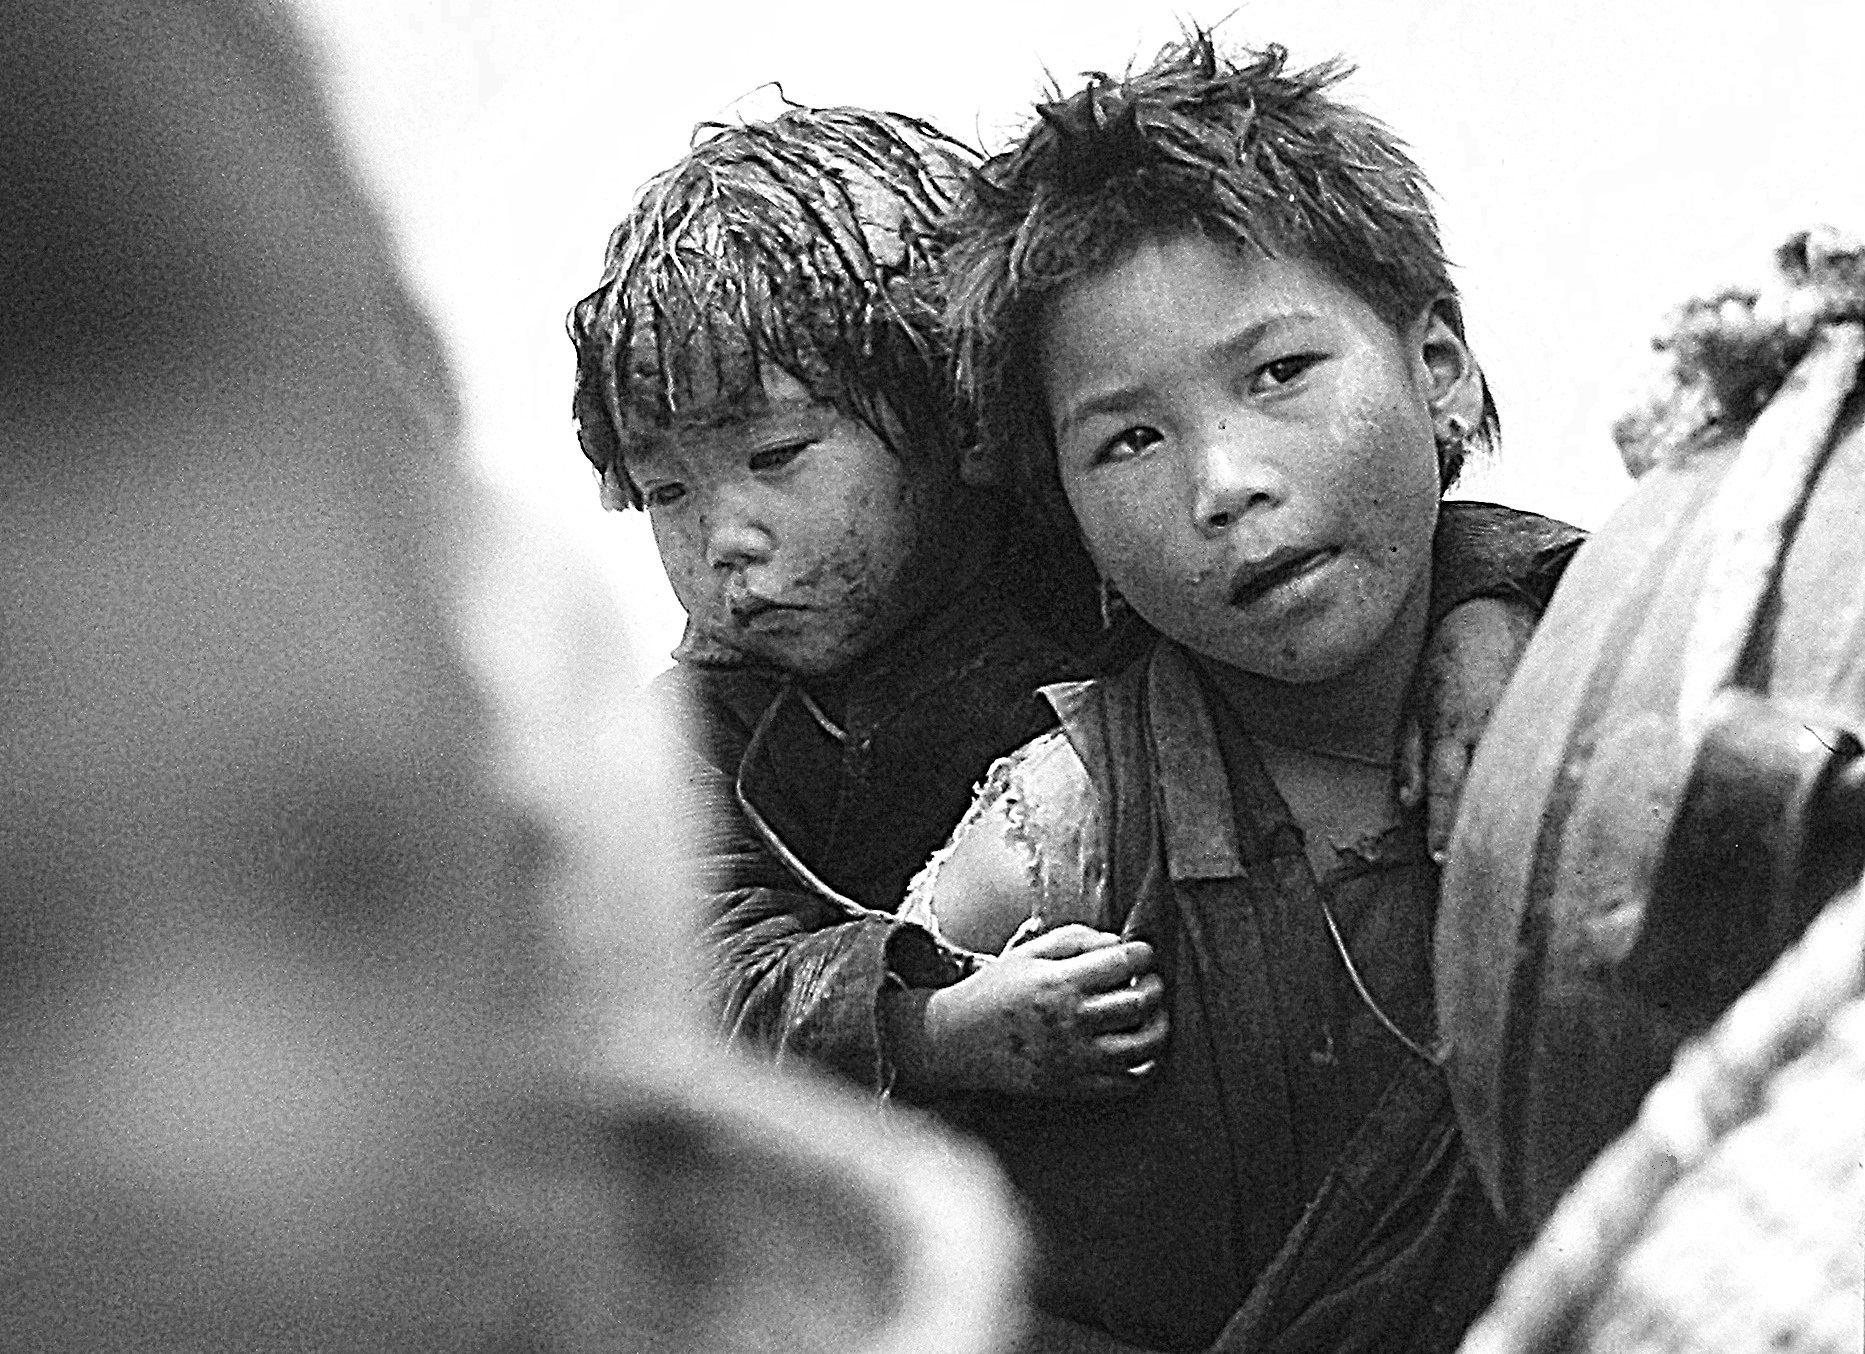 Difficult childhood - Tibet...